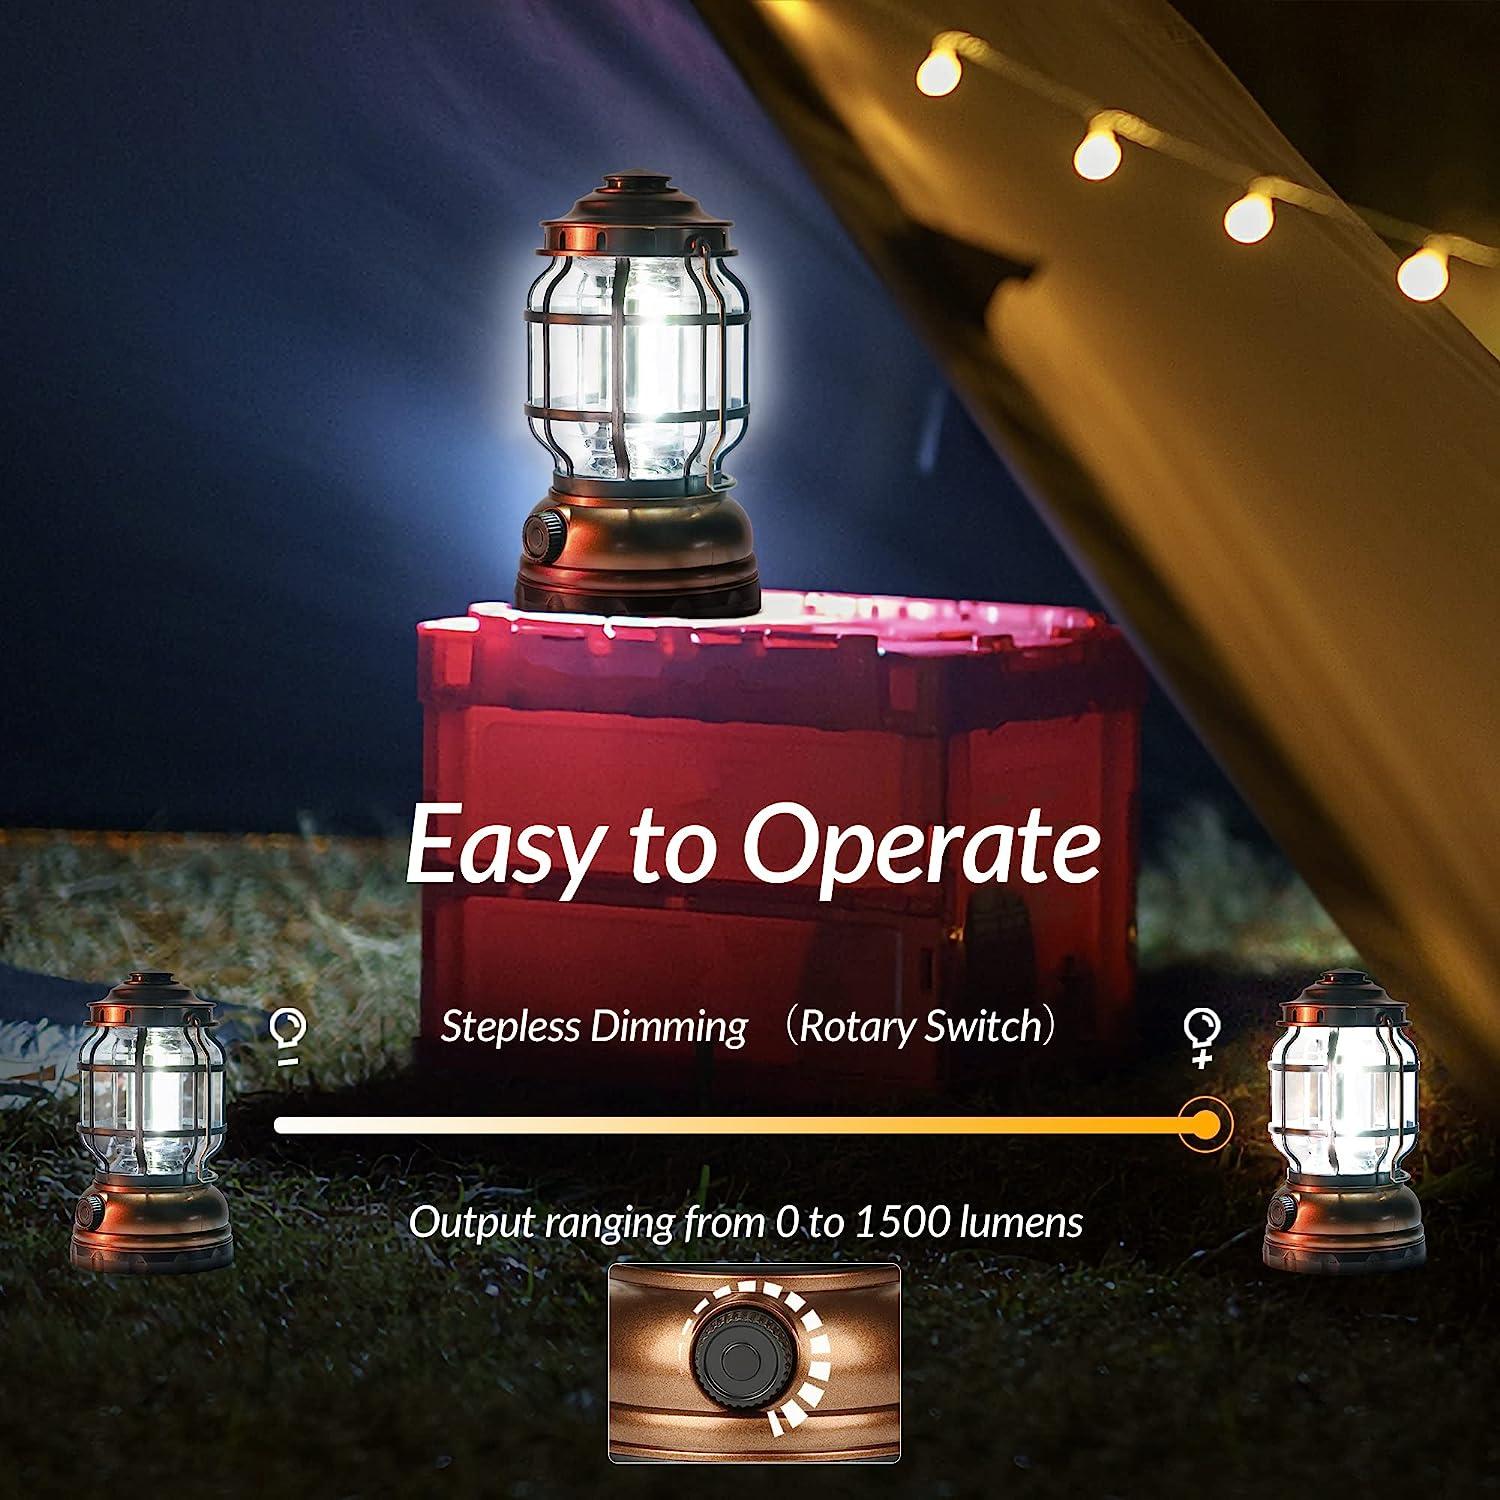 Battery Powered Tent Hanging Light Lantern Lamp Retro Style COB Camping Hiking Light, Size: L - White